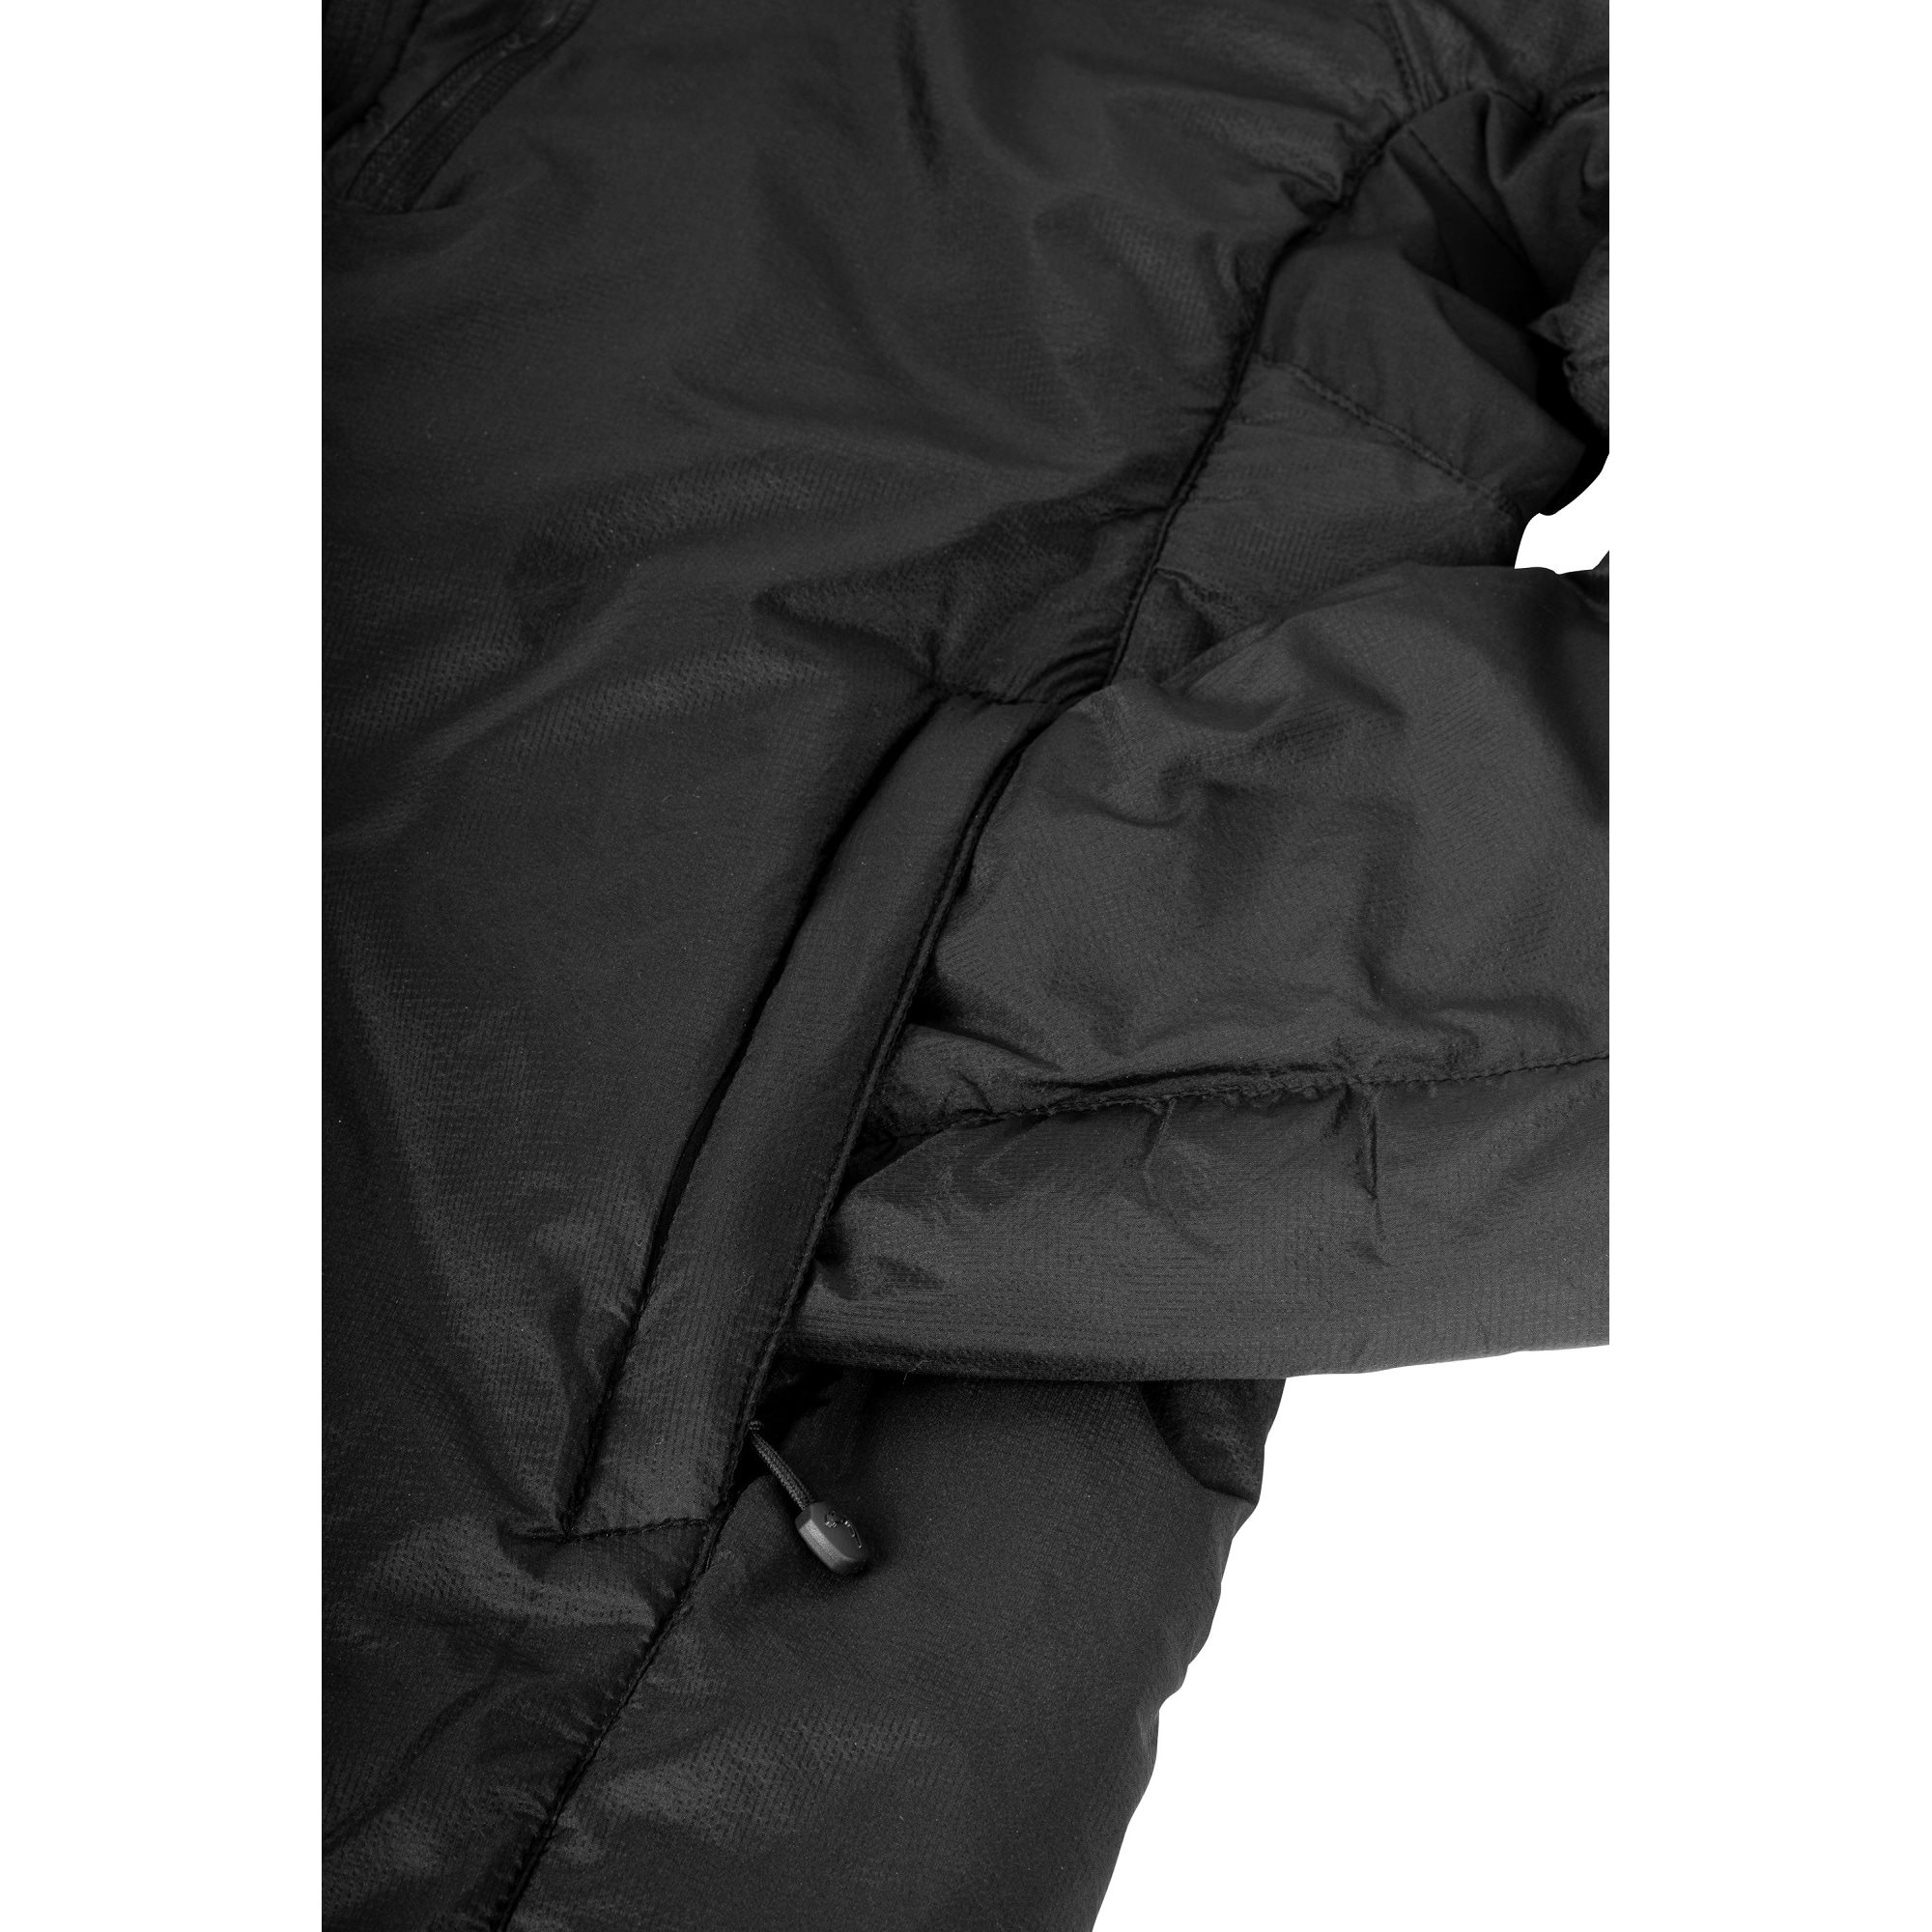 FRONTIER Jacket BLACK Viper® VJKTFROBLK L-11